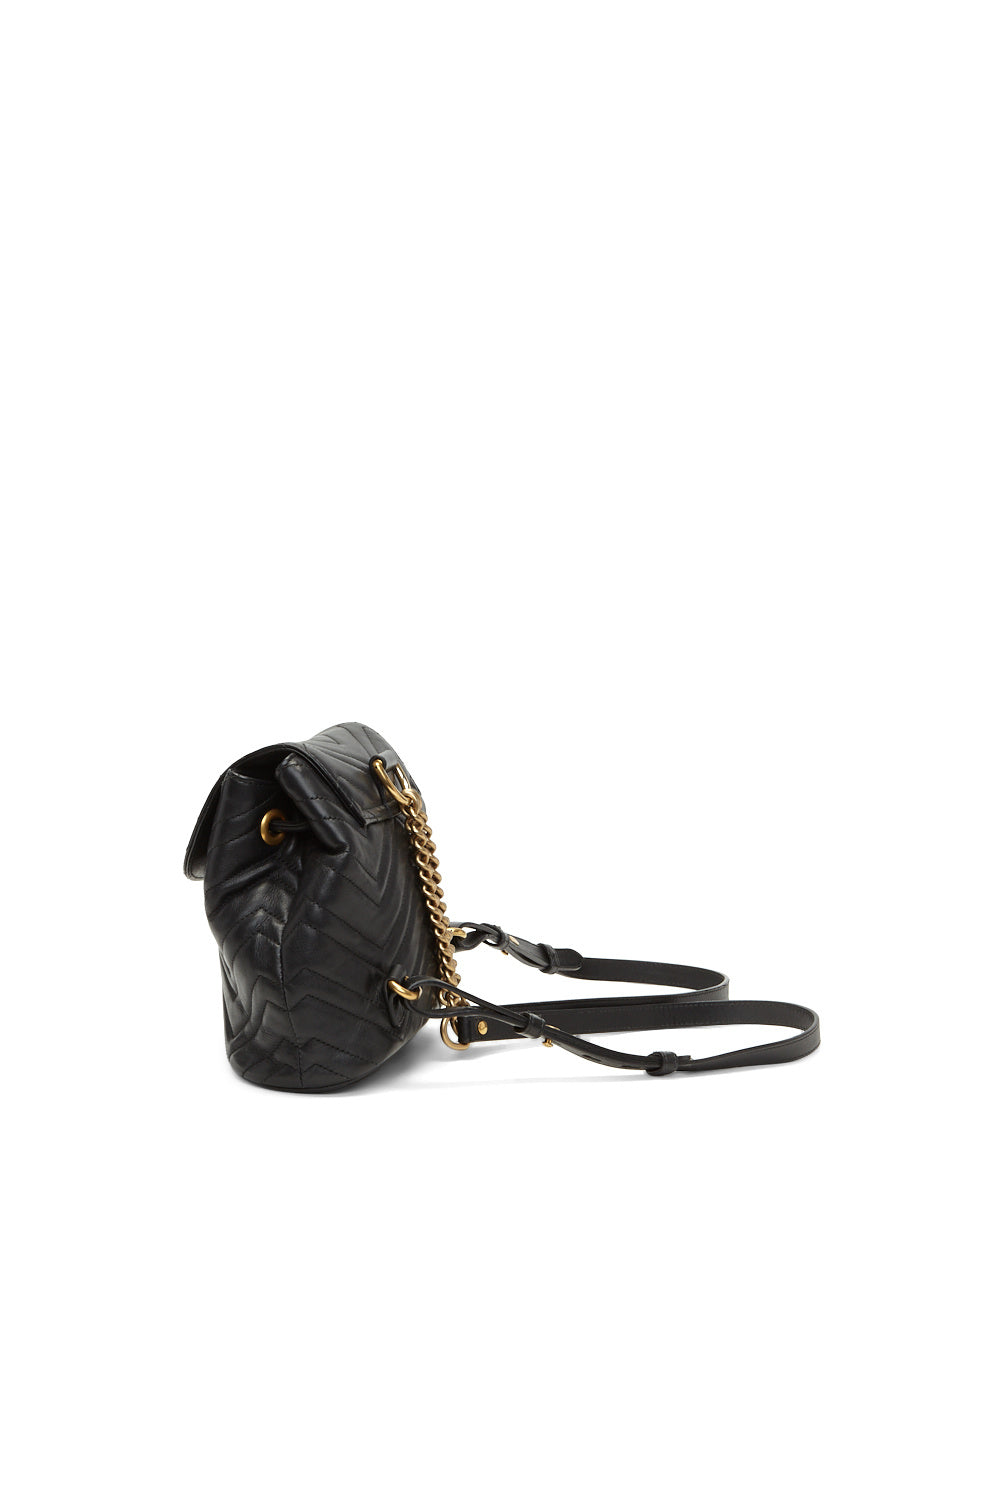 Gucci Black Calfskin Matelassé GG Marmont Mini Backpack